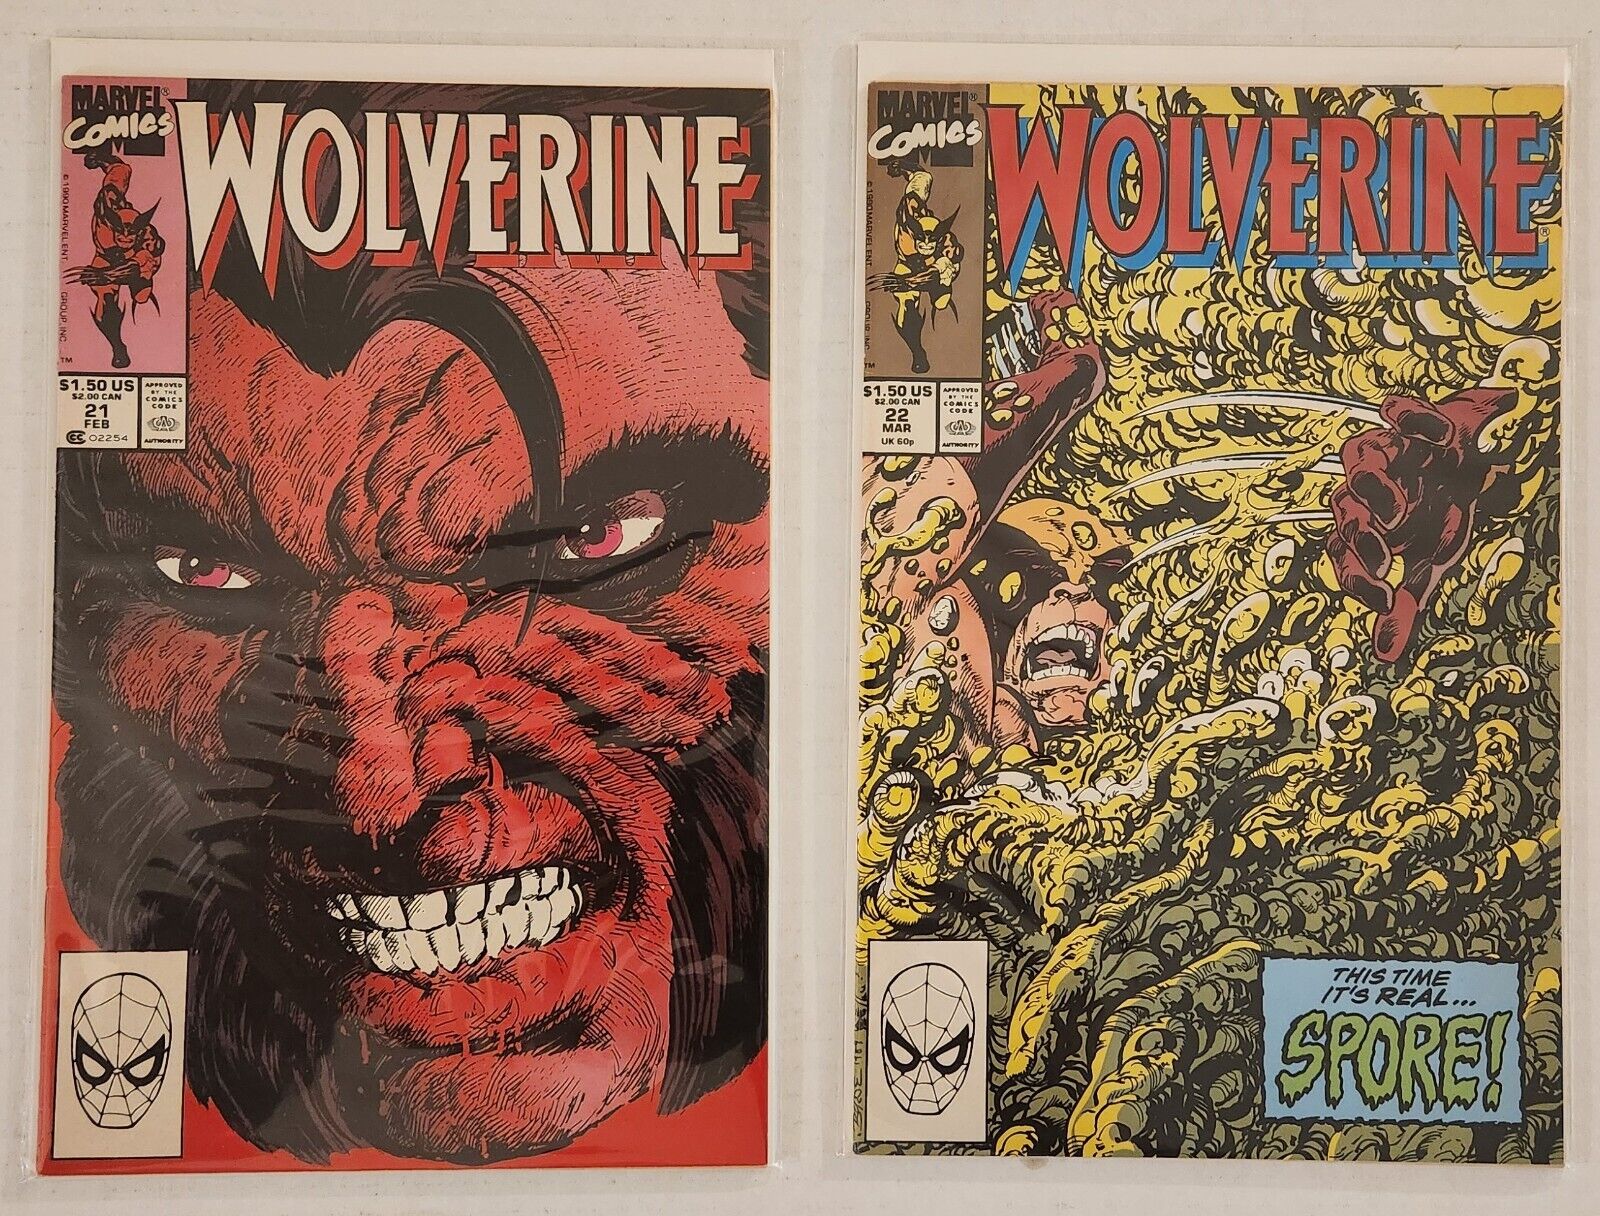 Wolverine (vol. 2) #21-30 (Marvel Comics 1990) 10 issue run